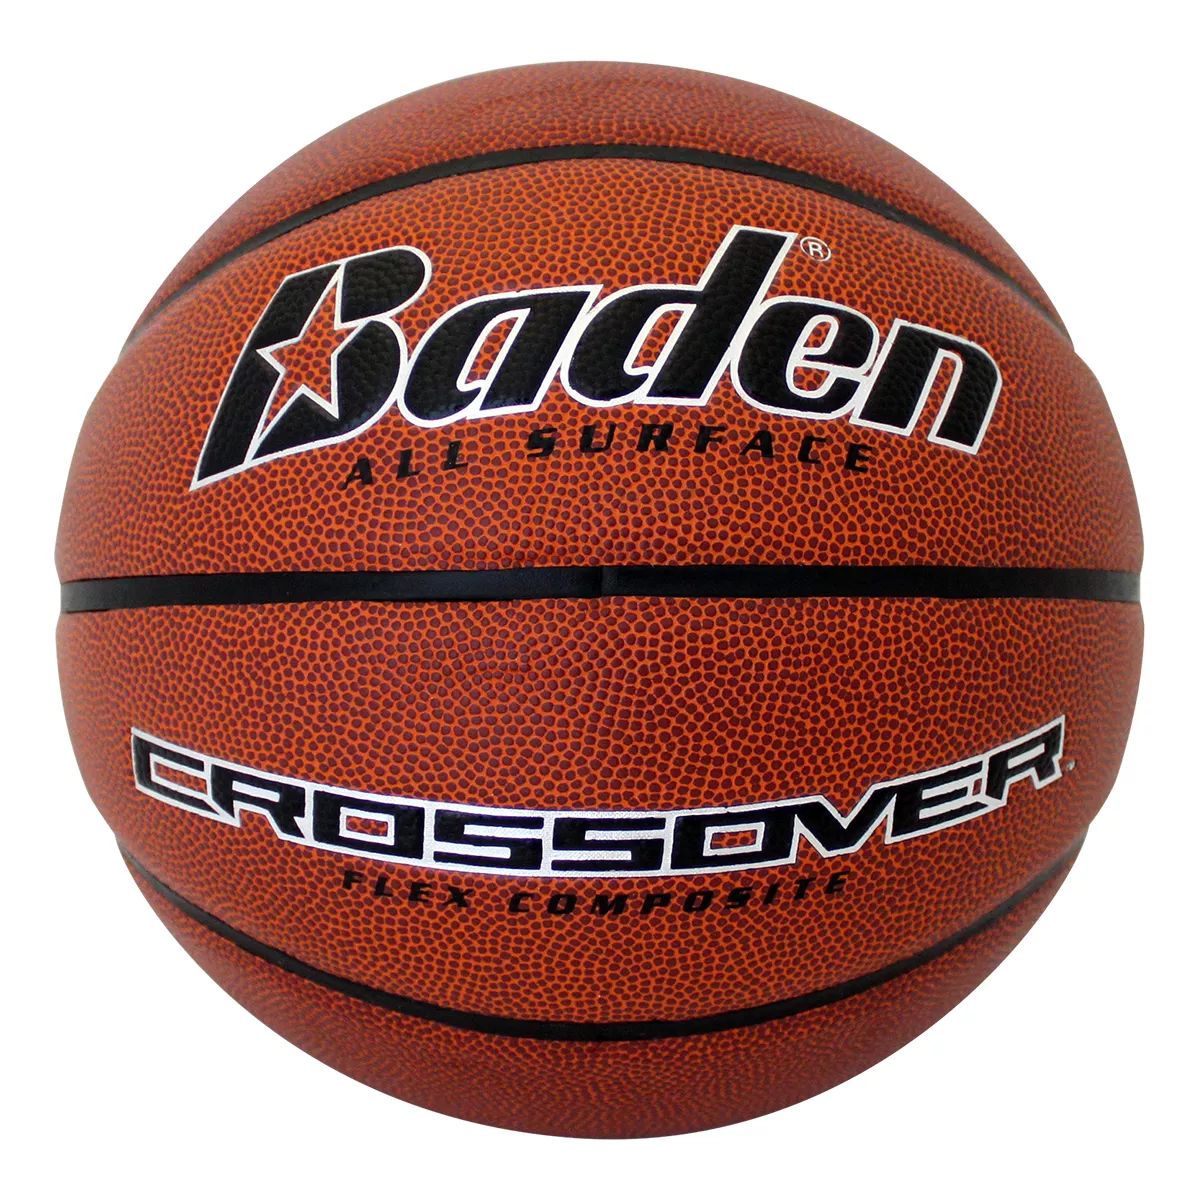 Image of Baden Crossover Flex Composite Basketball - Size 5